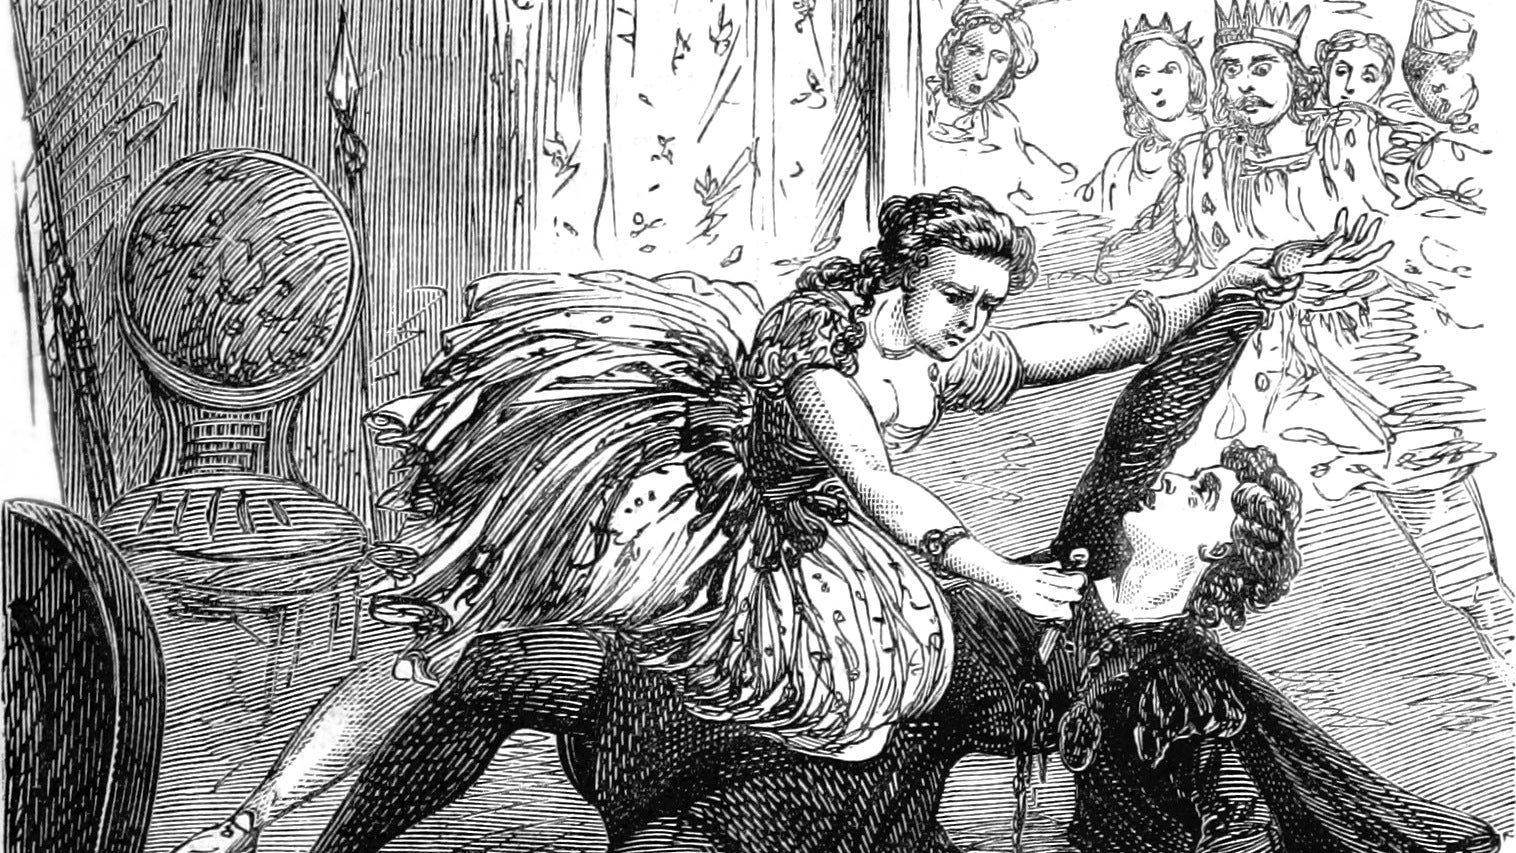 A ballerina stabs a man before assembled shocked royals in an illustration from 'Rose Mortimer; or, the Ballet-Girl's revenge'.